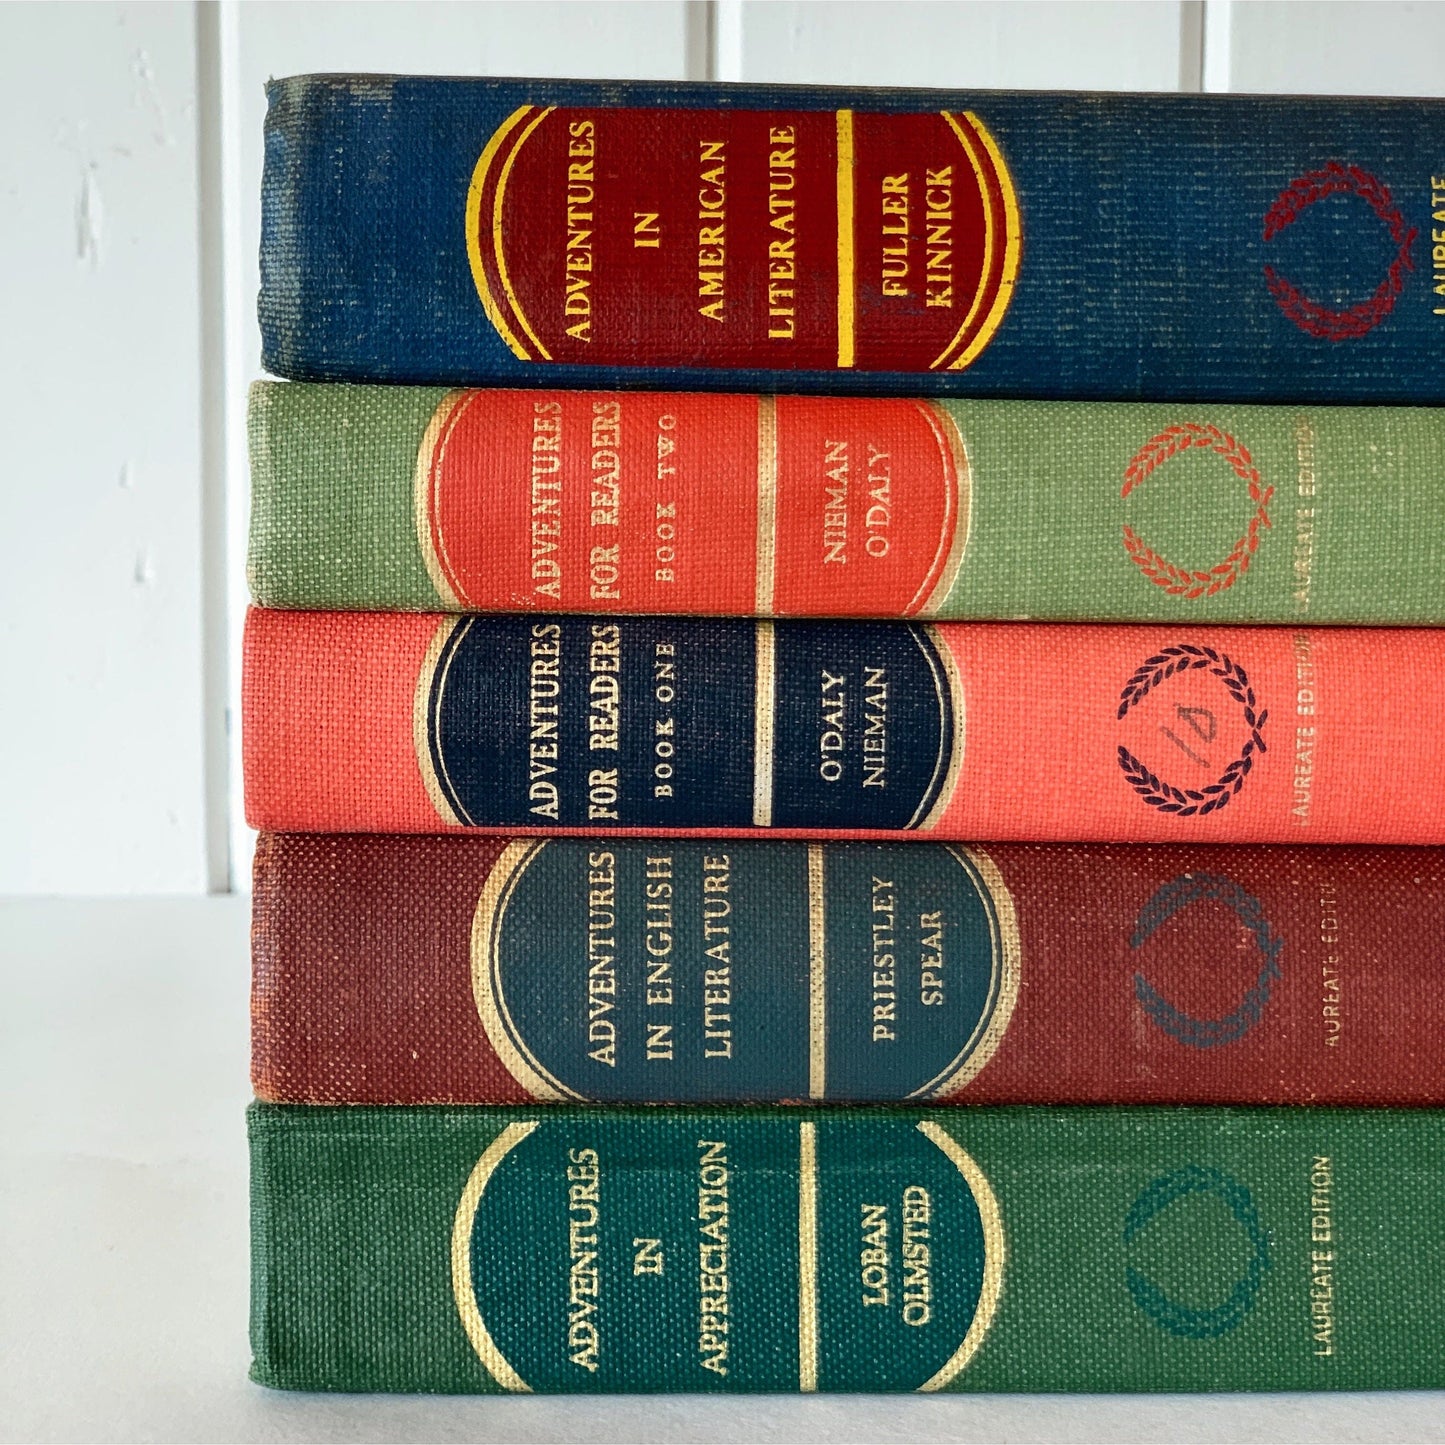 Mid Century English School Book Set, Laureate Editions, Adventures in English